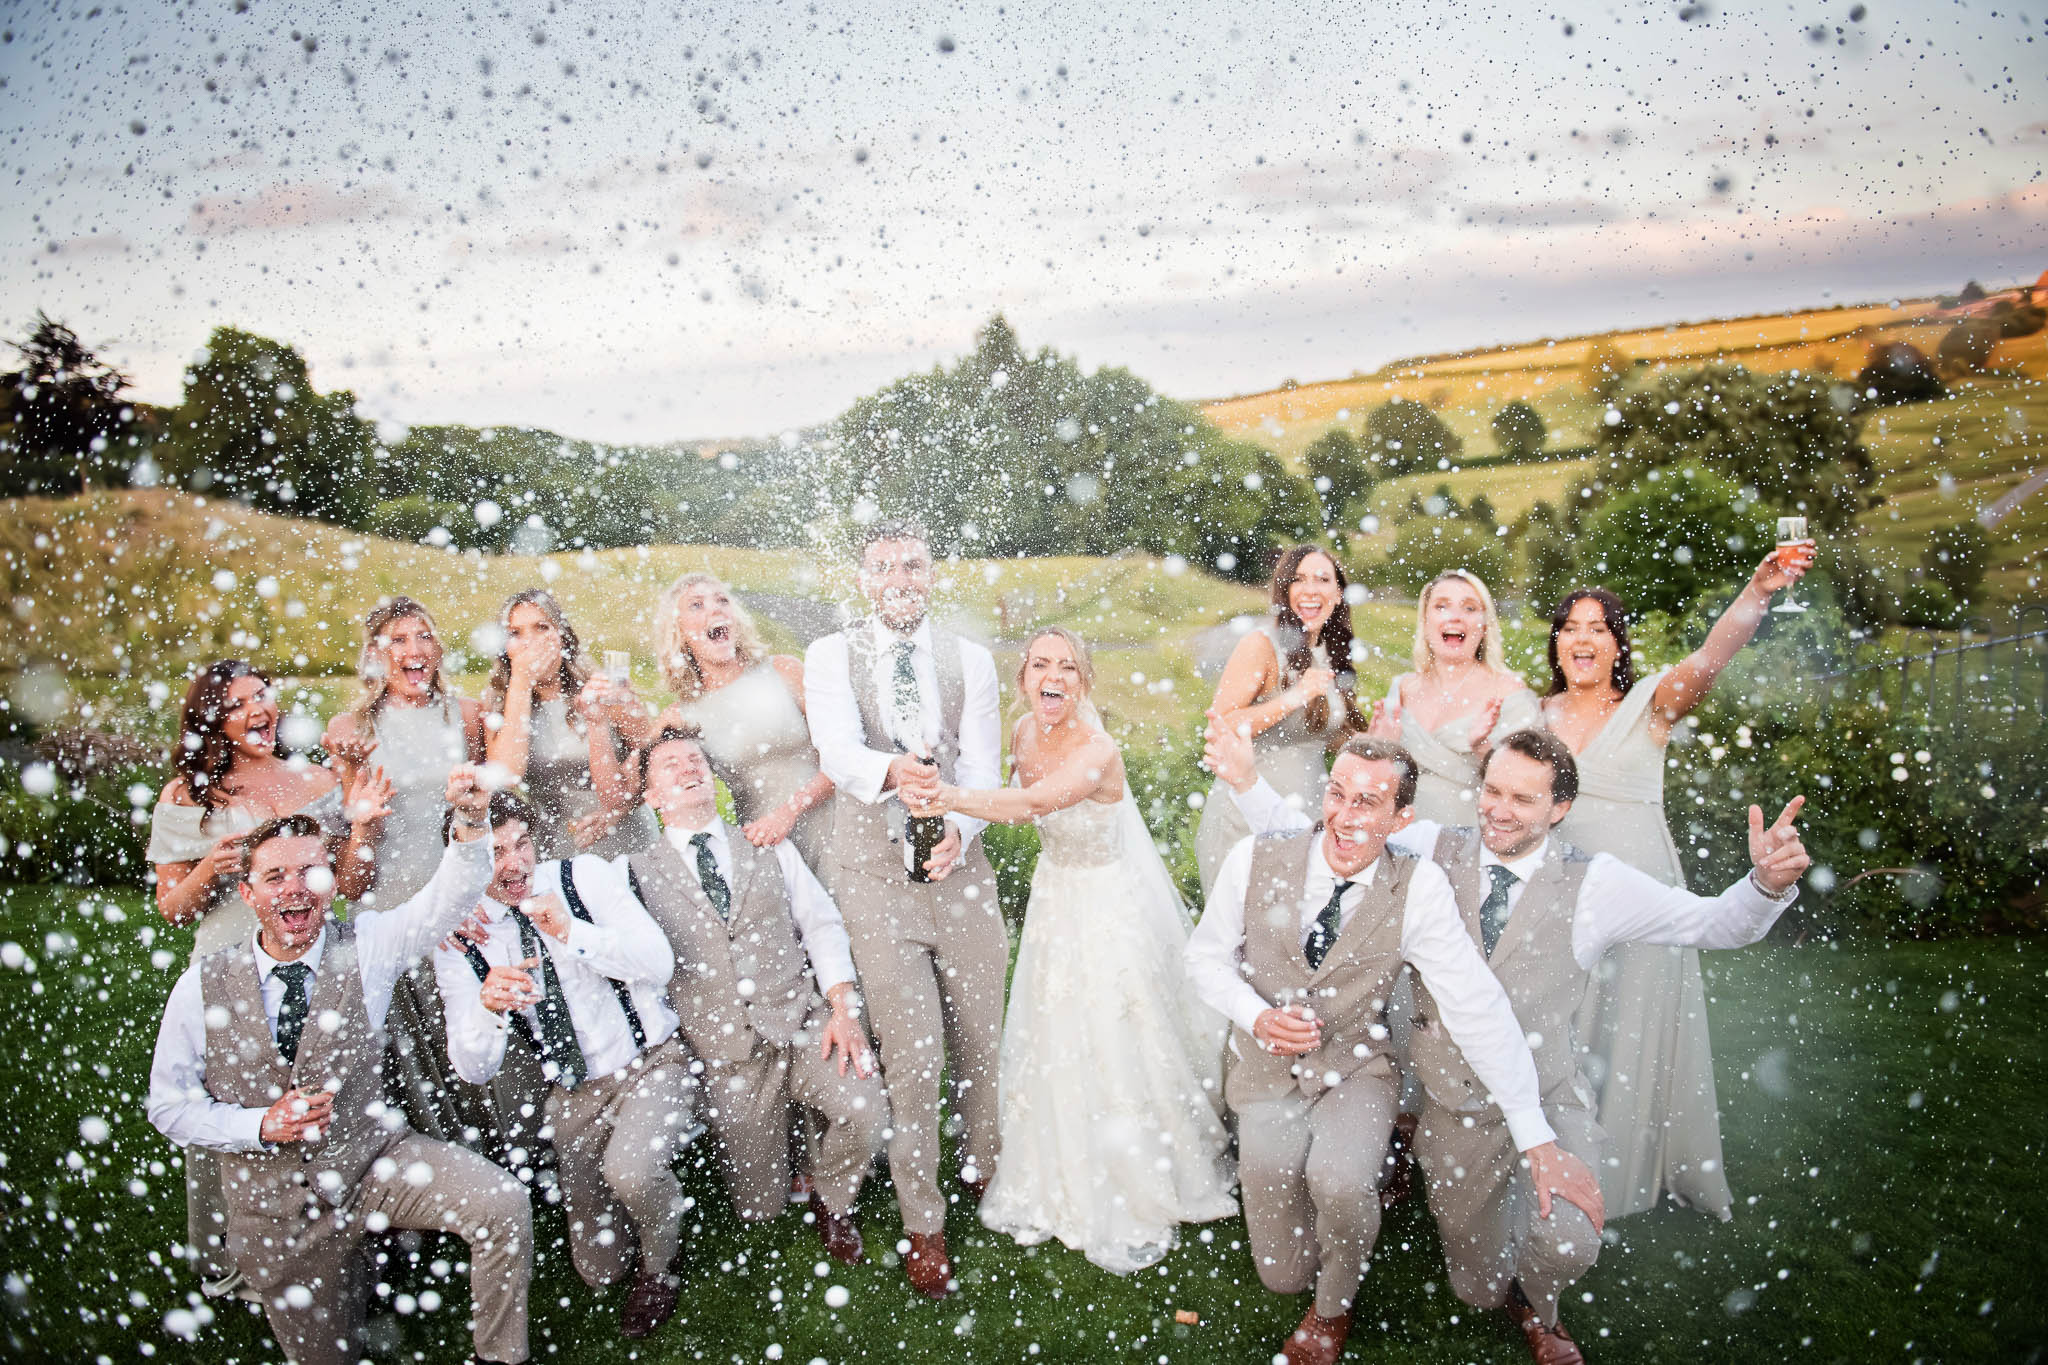 Bridal Party spray champagne in a wedding celebration